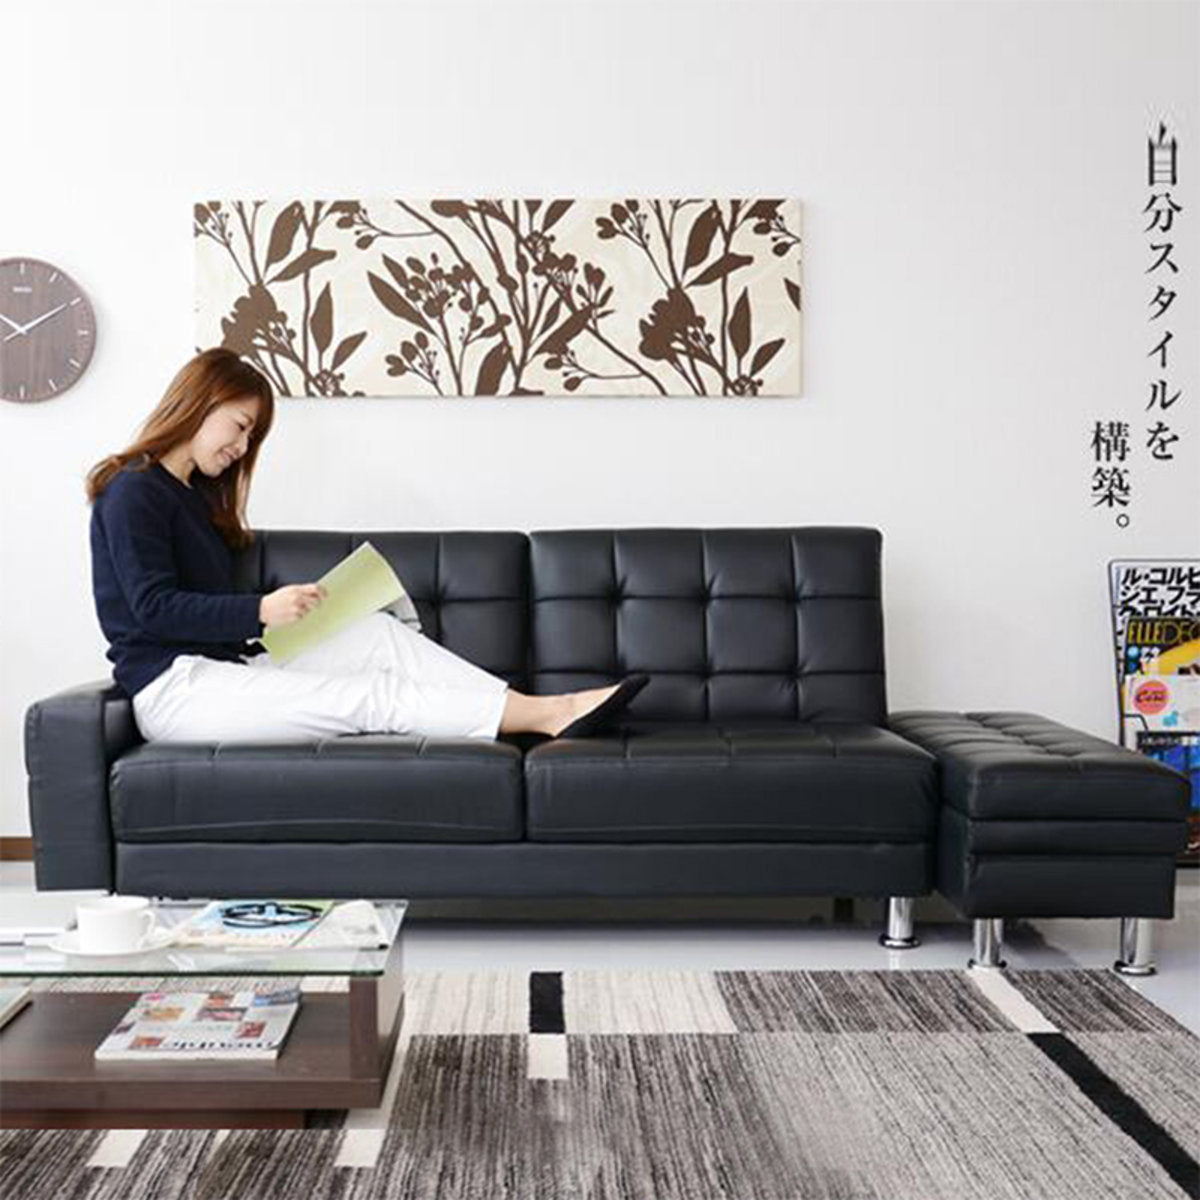 MerryRabbit – 日式小戶型多功能組合PU沙發MR-028 Pu Sofa Bed With Storage Ottoman